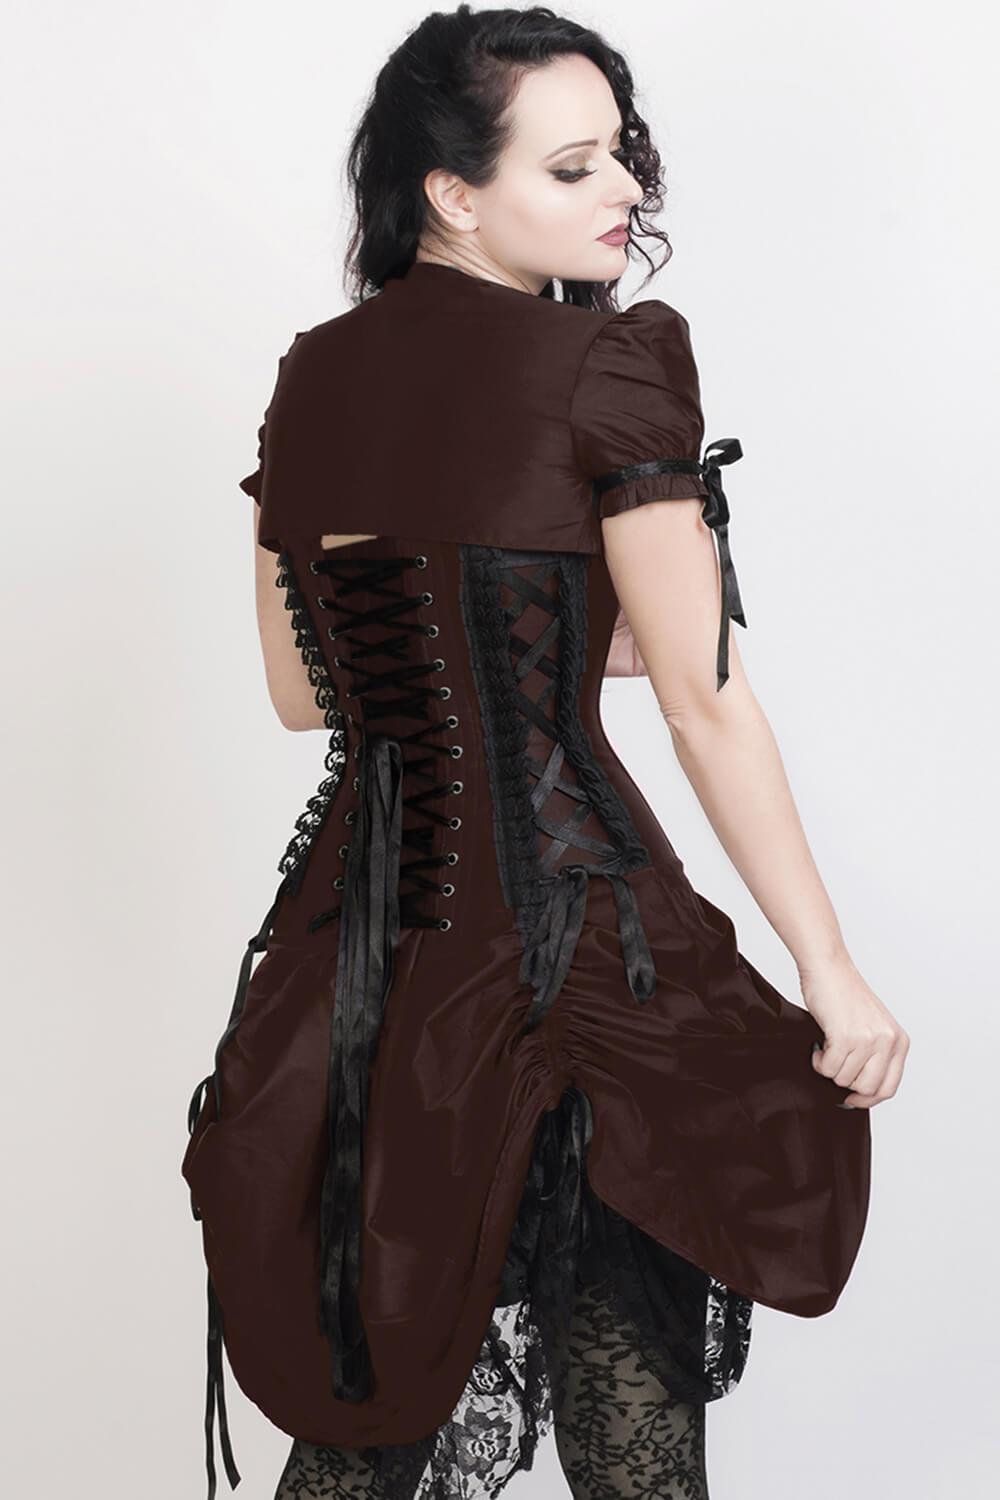 Dracula Clothing Bat Ruffle Lace Brocade Steampunk Victorian Gothic Dress  32-9-B